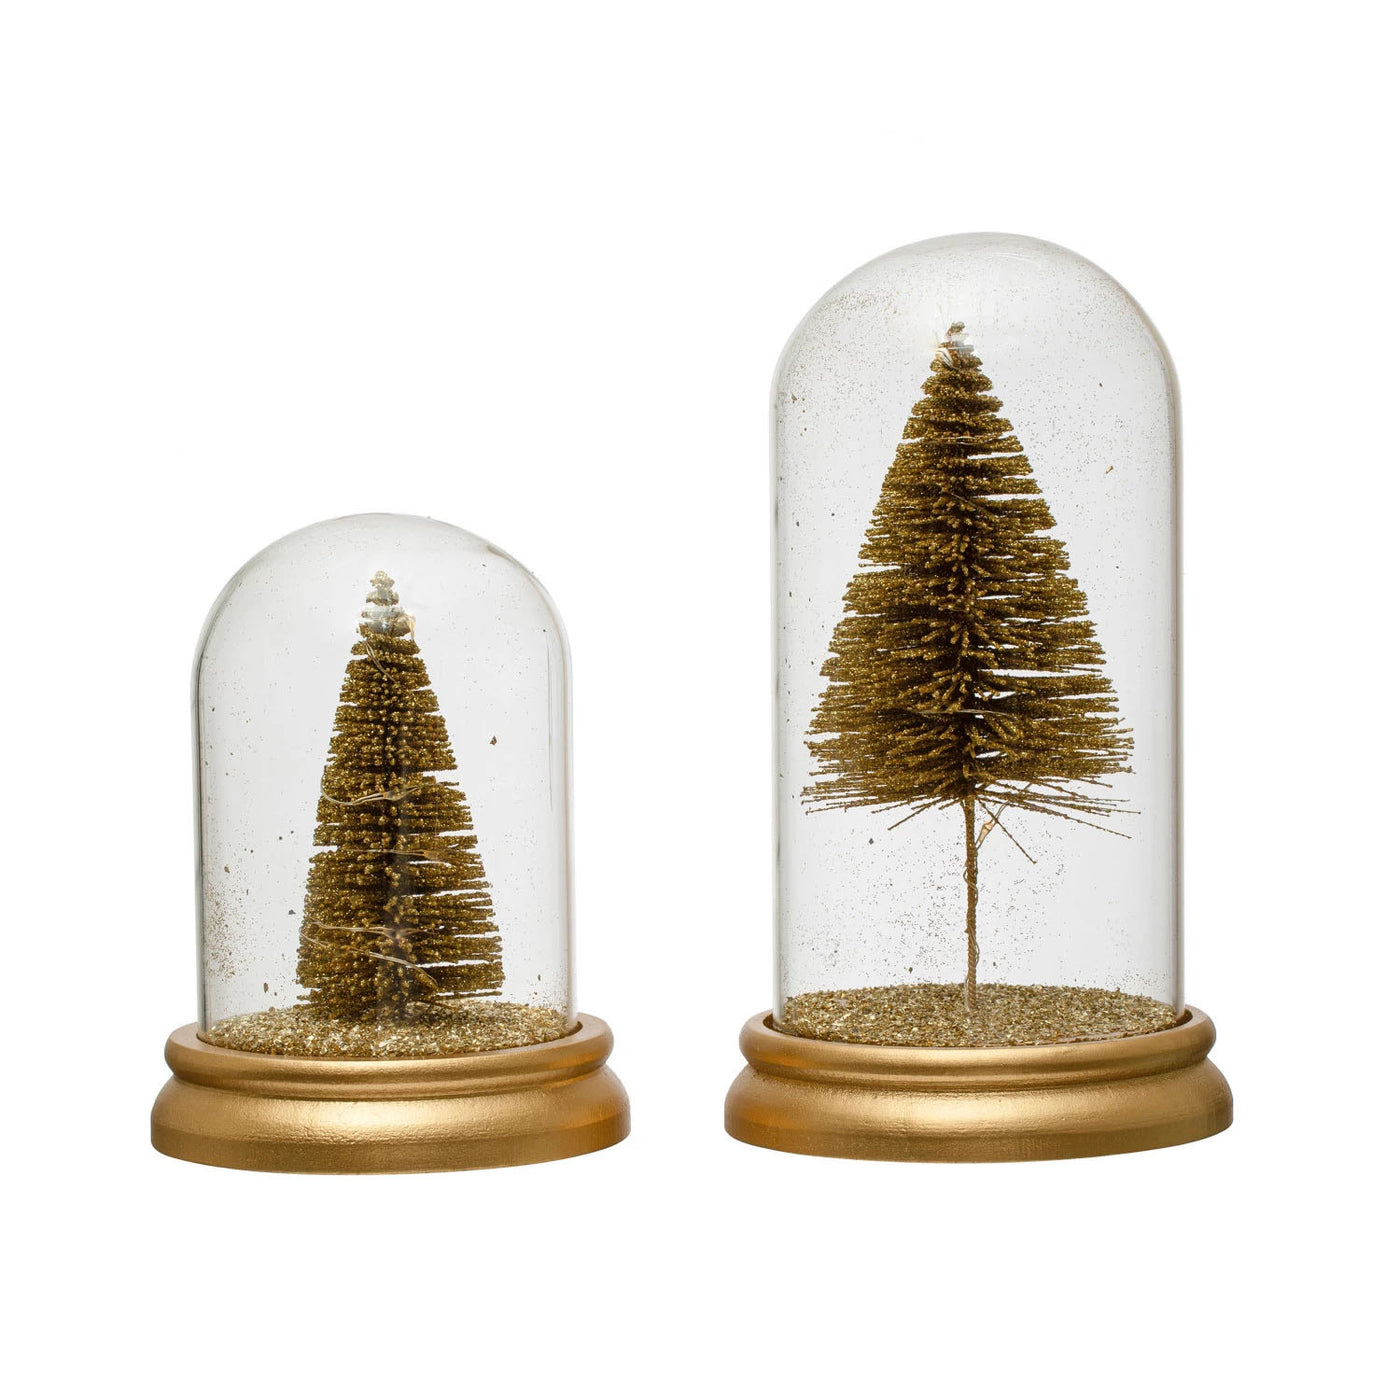 Golden Bottle Brush Tree in Cloche With LED Light - Choose Size